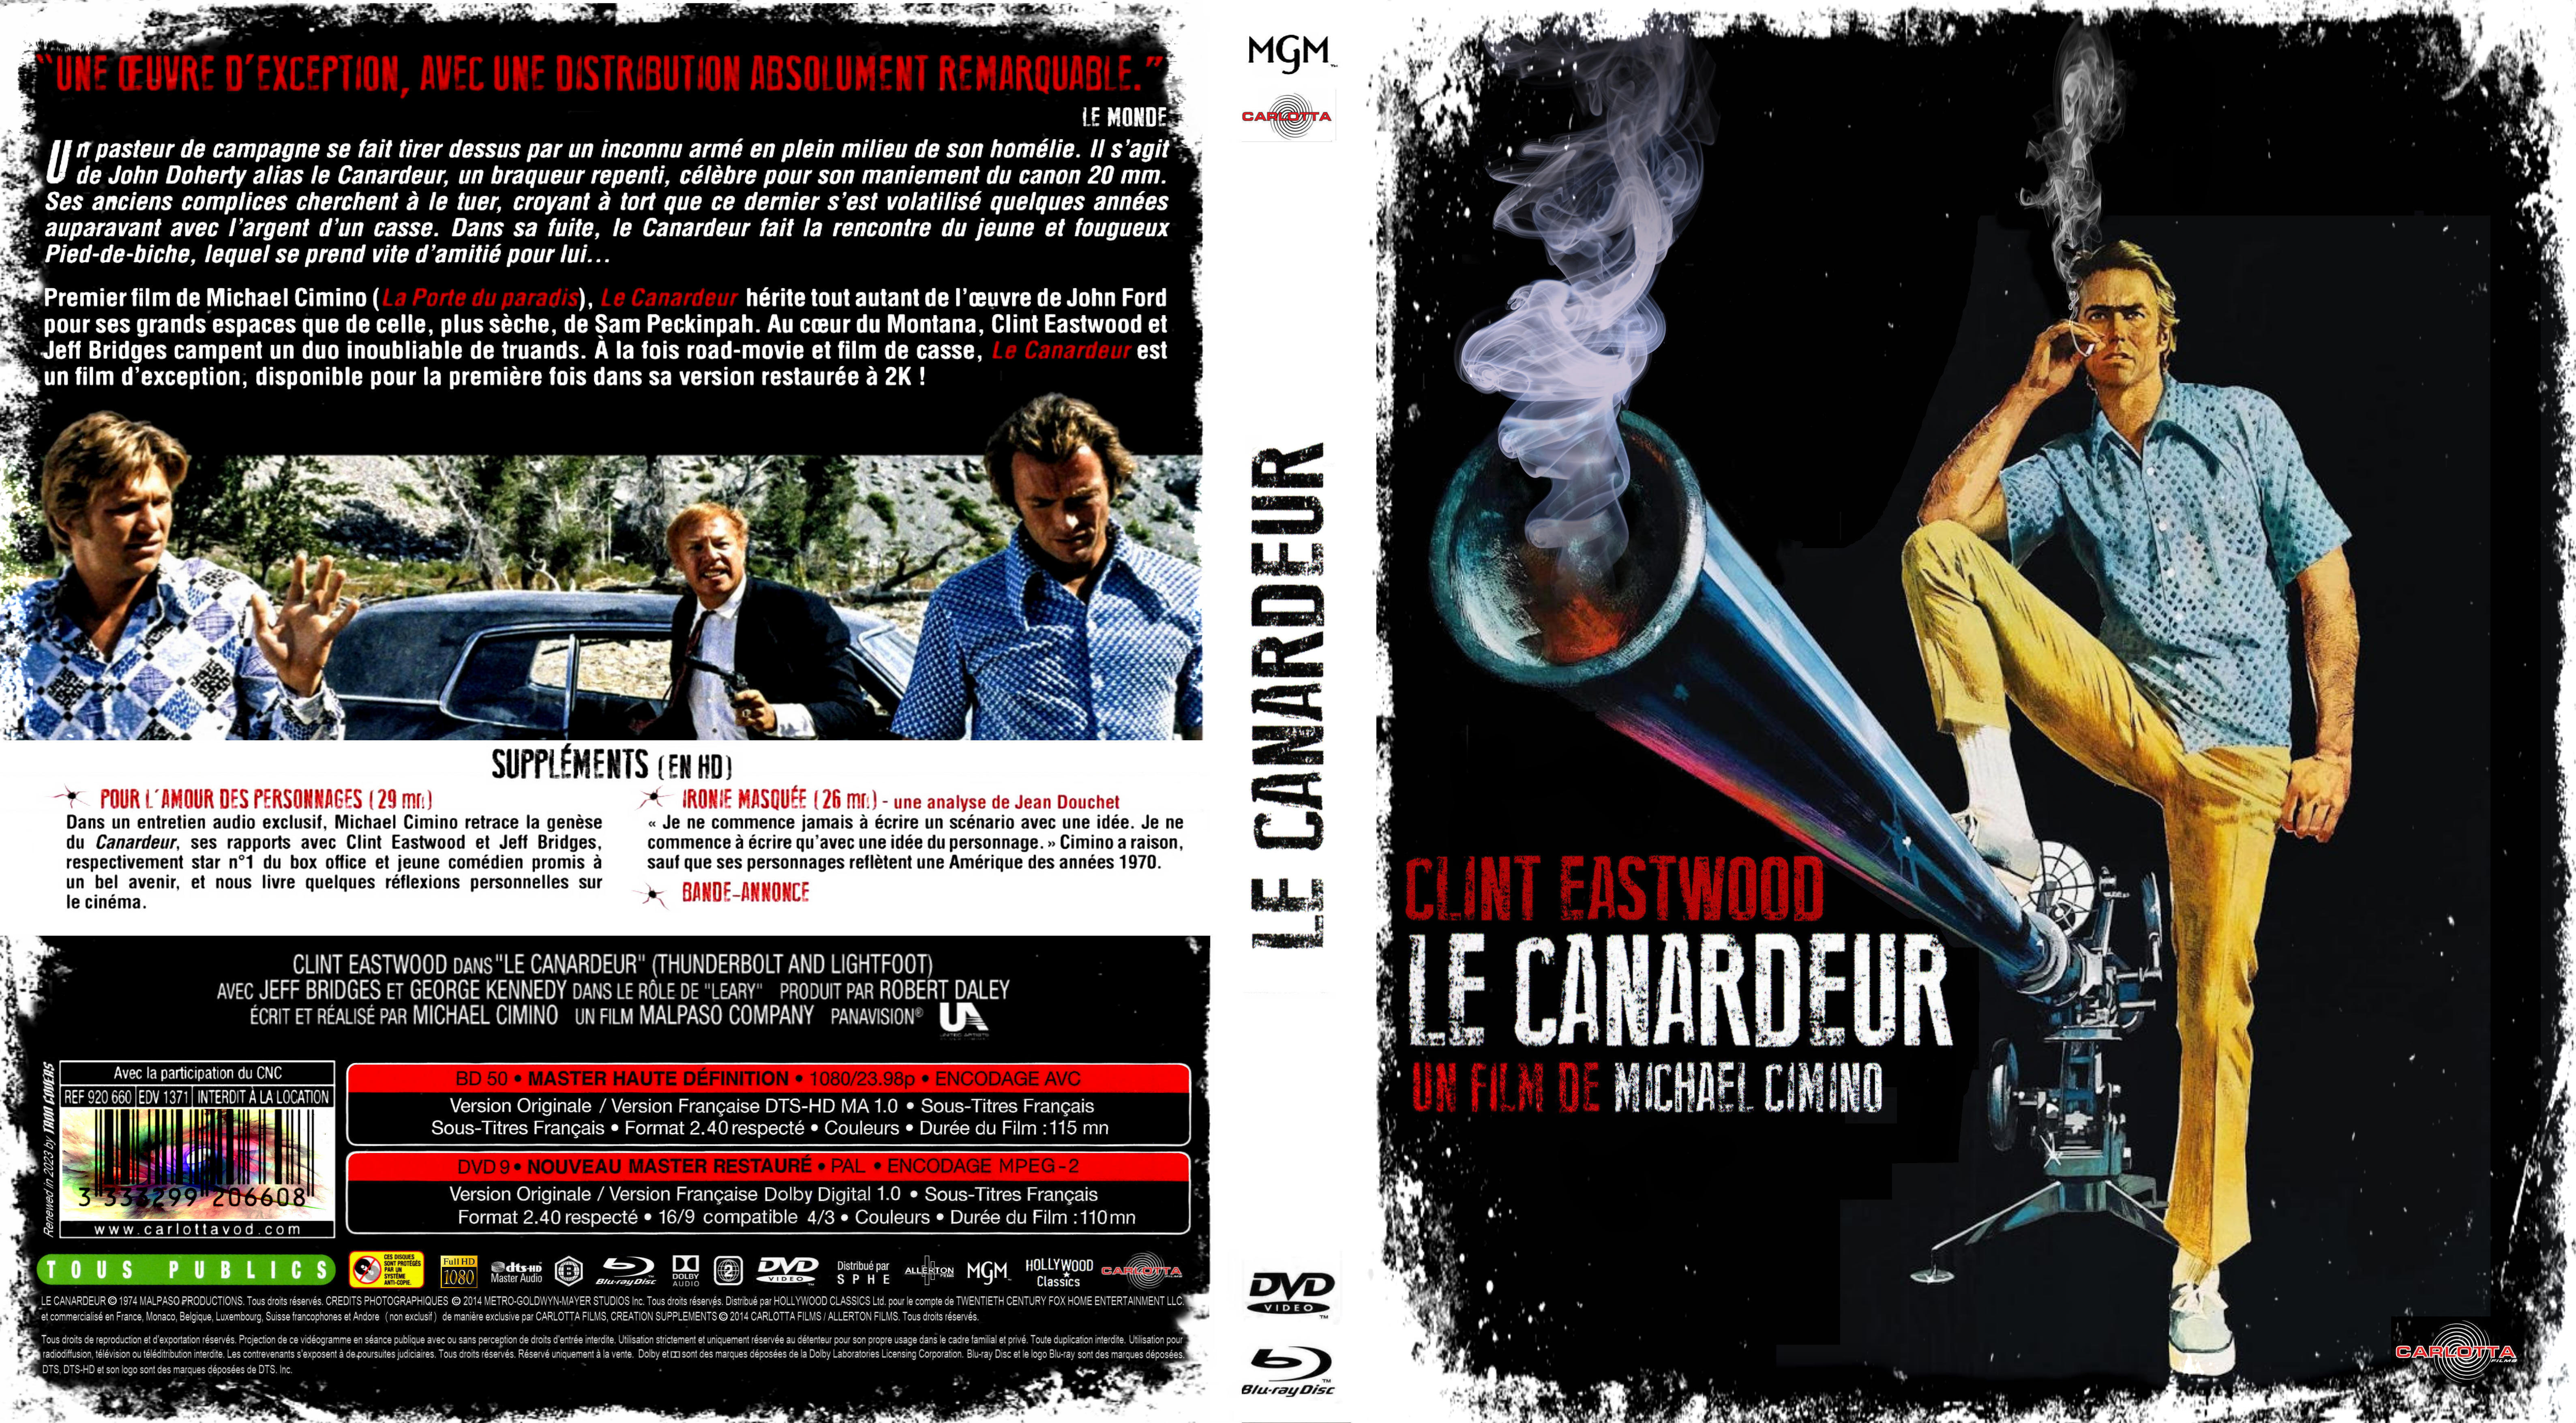 Jaquette DVD Le Canardeur custom (BLU-RAY)